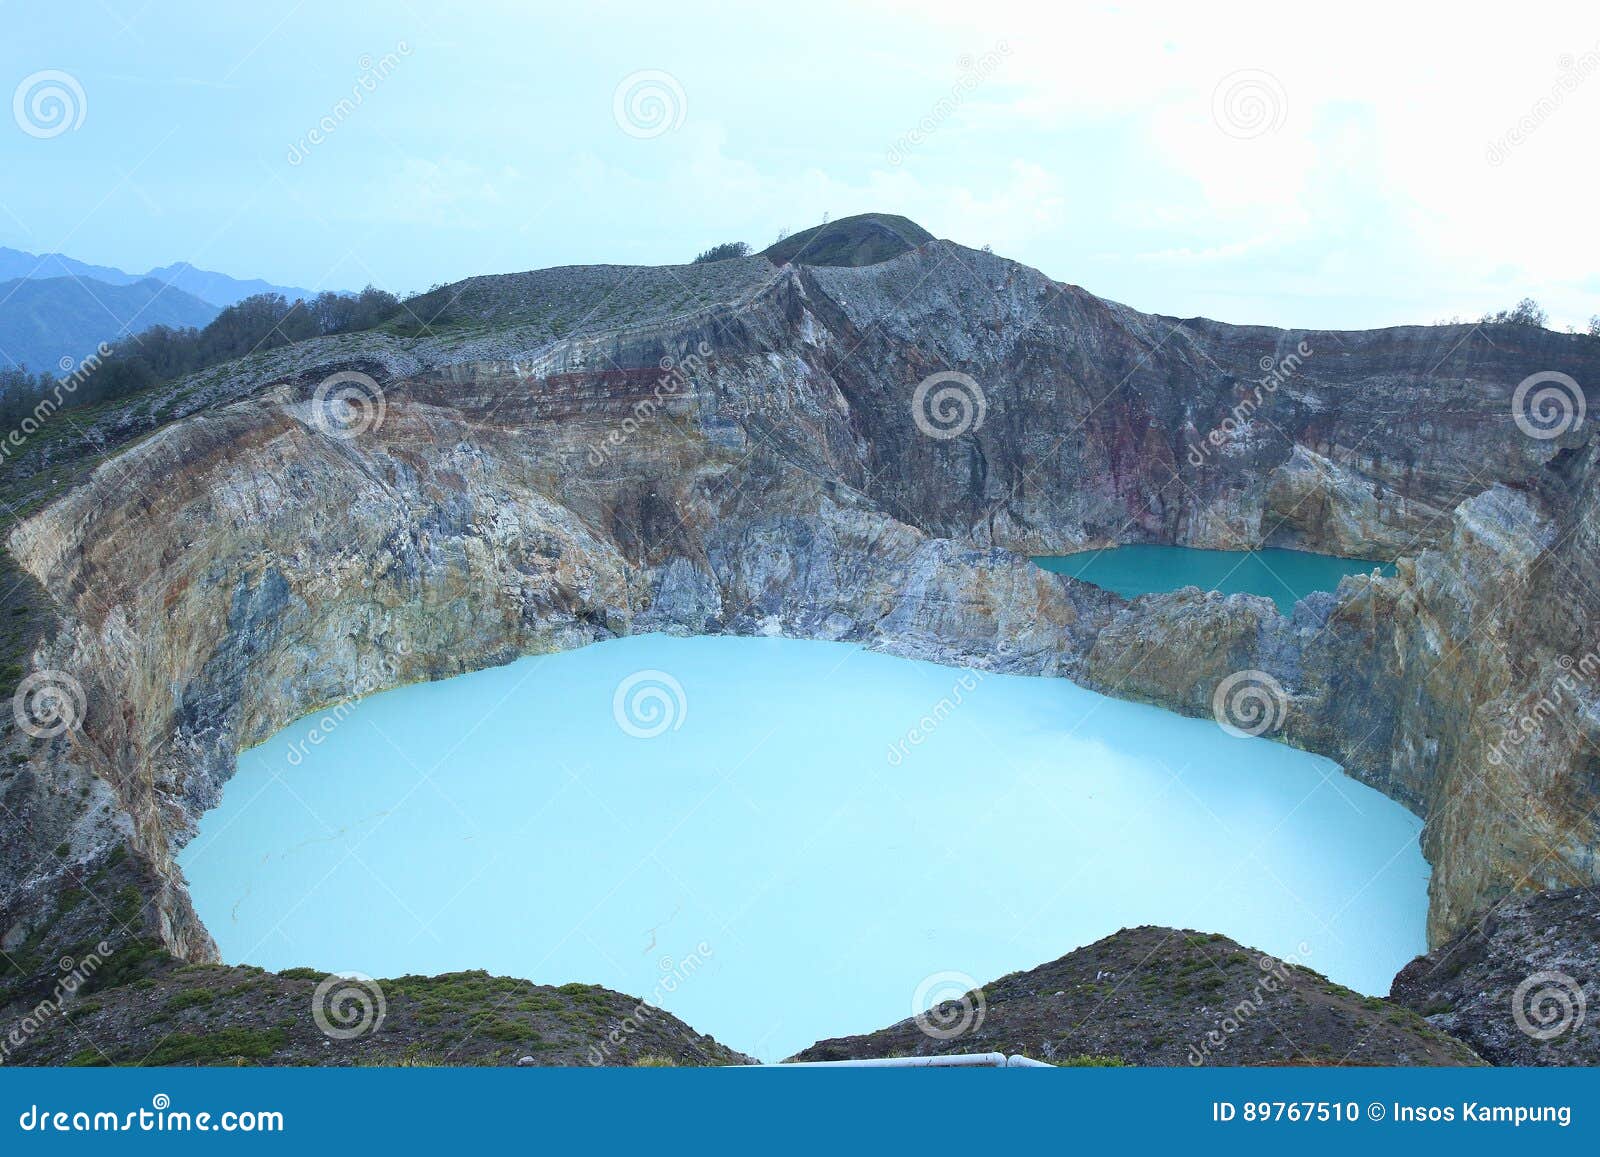 scenic three colored lakes kelimutu, ende